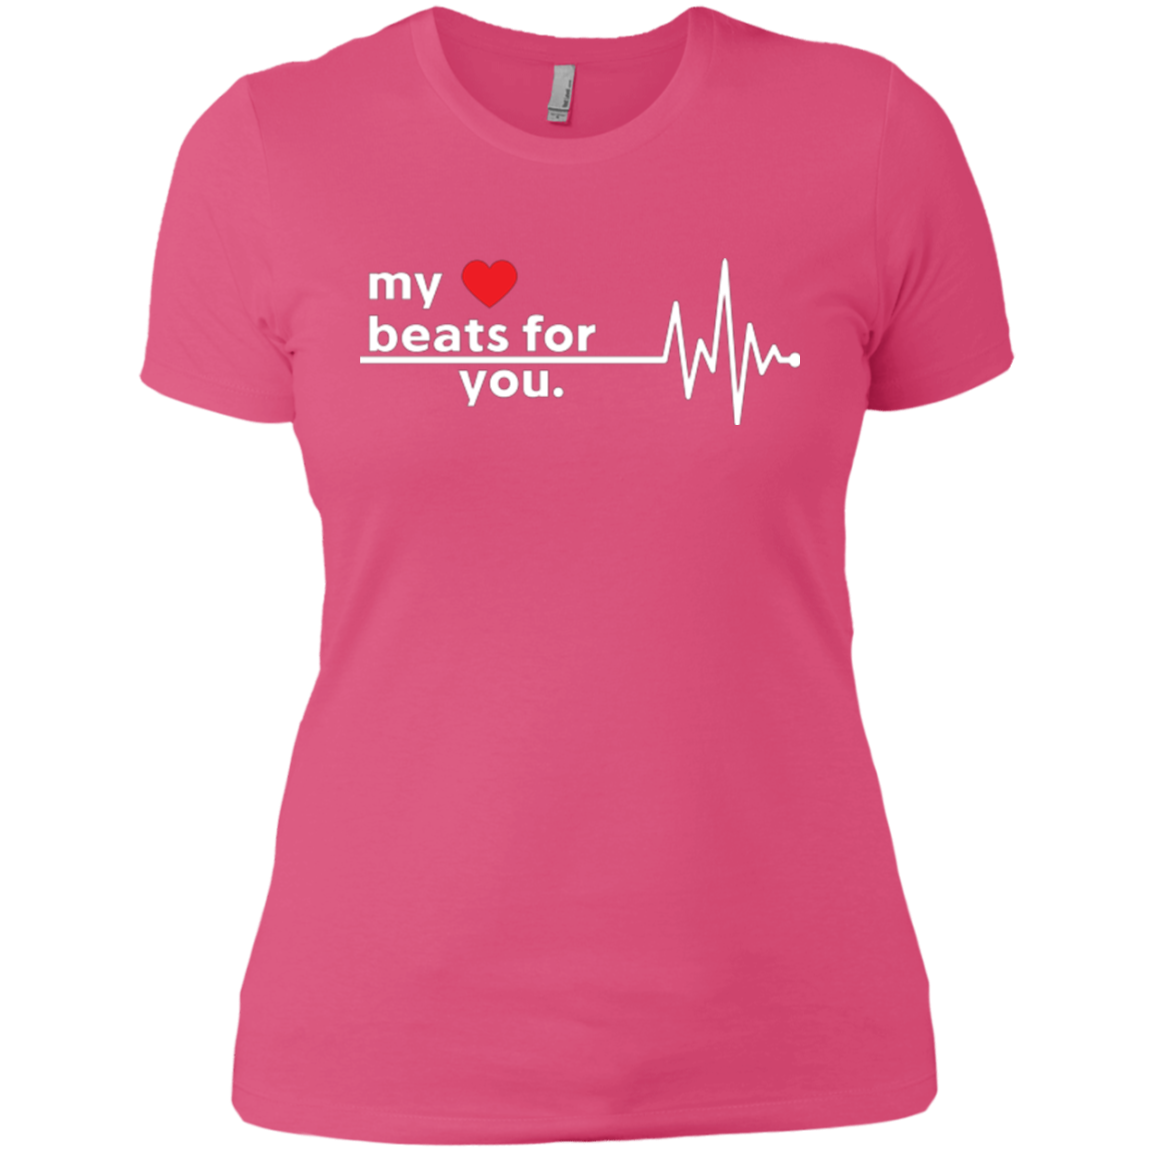 "My Heart Beats For You" Couple Shirt